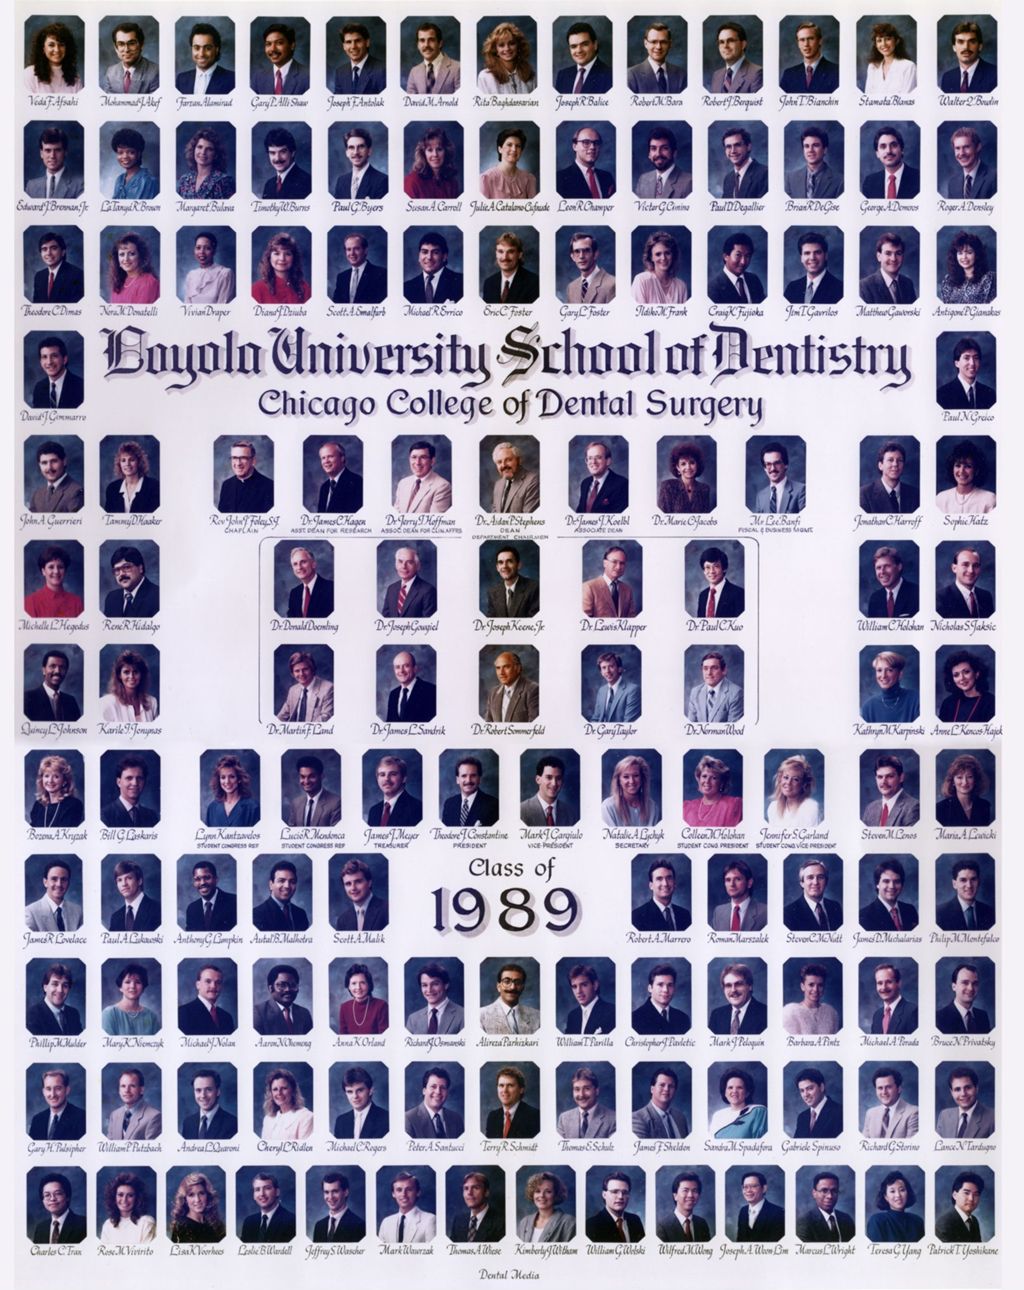 Miniature of 1989 graduating class, Loyola University School of Dentistry, Chicago College of Dental Surgery